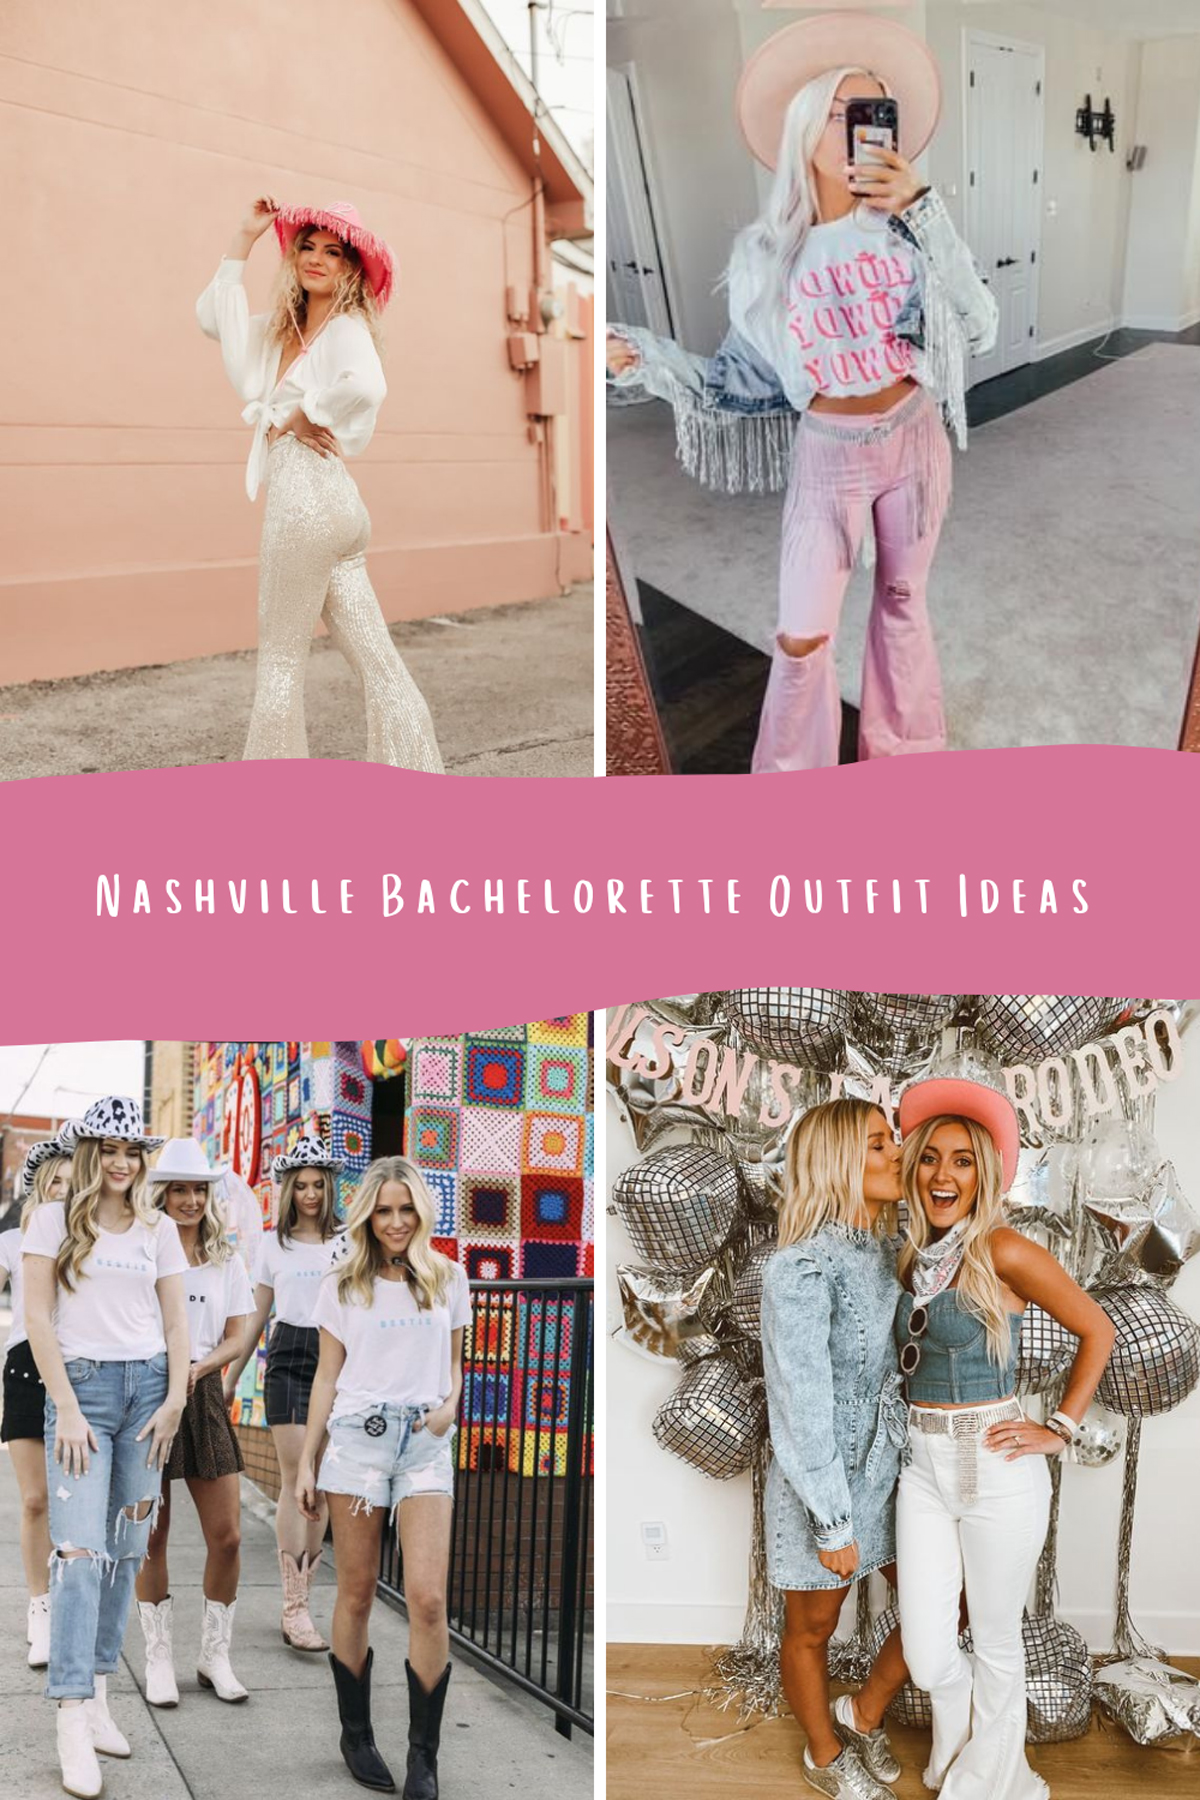 Nashville Bachelorette OutfitI deas